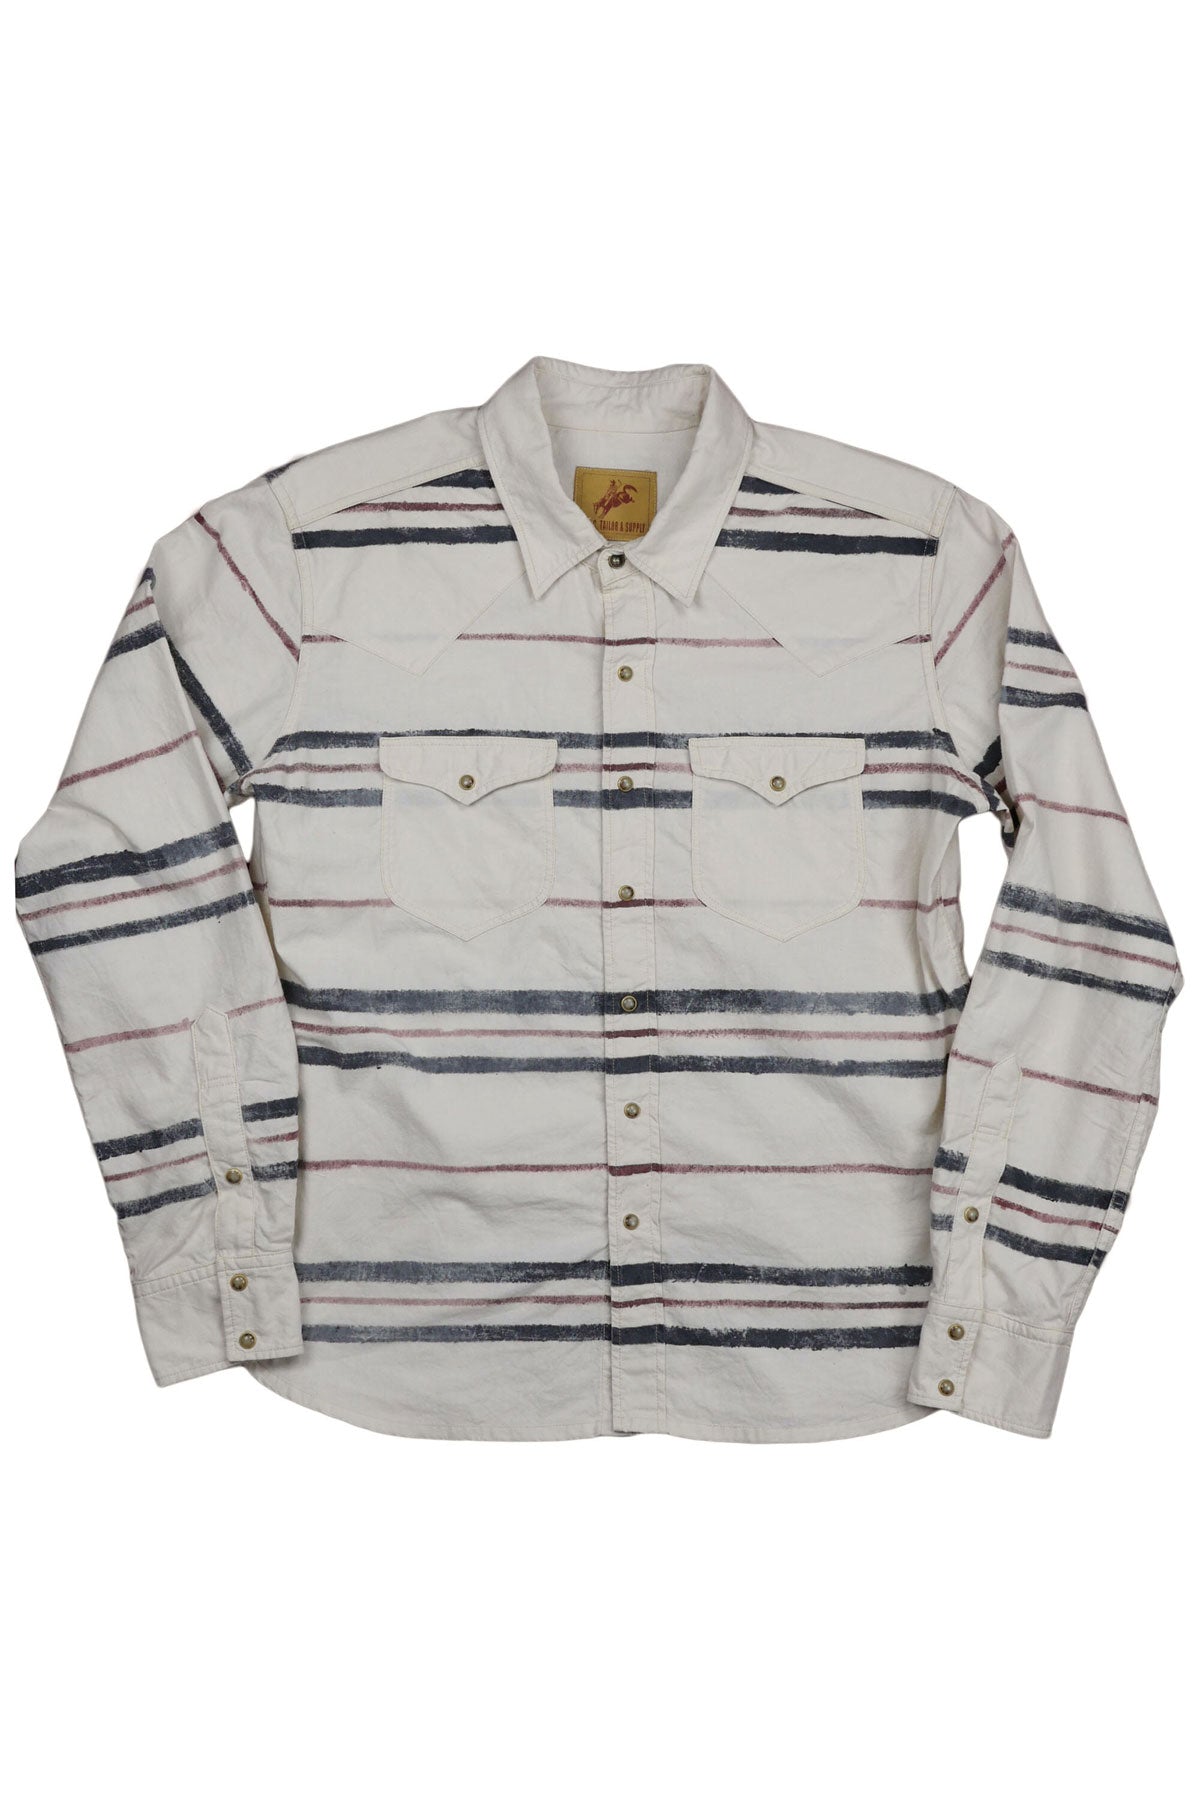 FBC Tailor & Supply - Striped Shirt